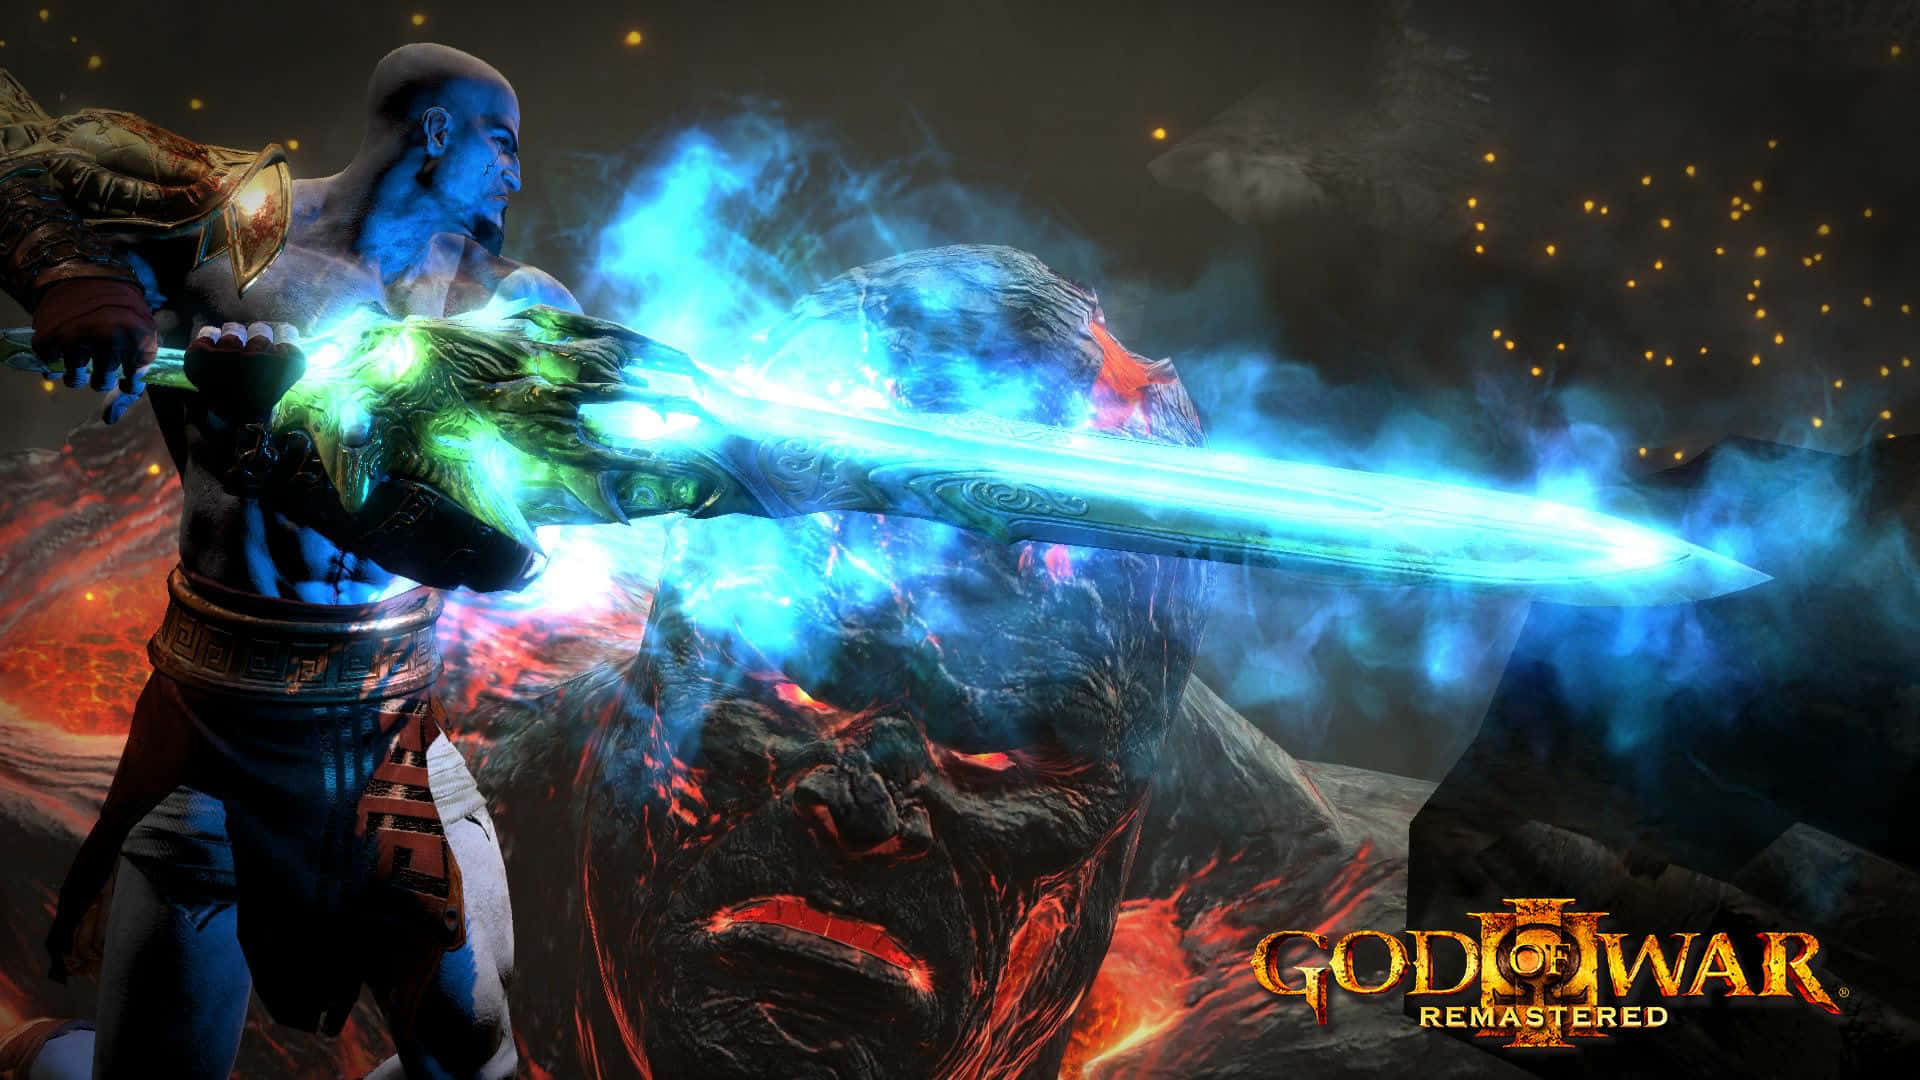 Arese Kratos Si Scontrano In God Of War 3 Sfondo